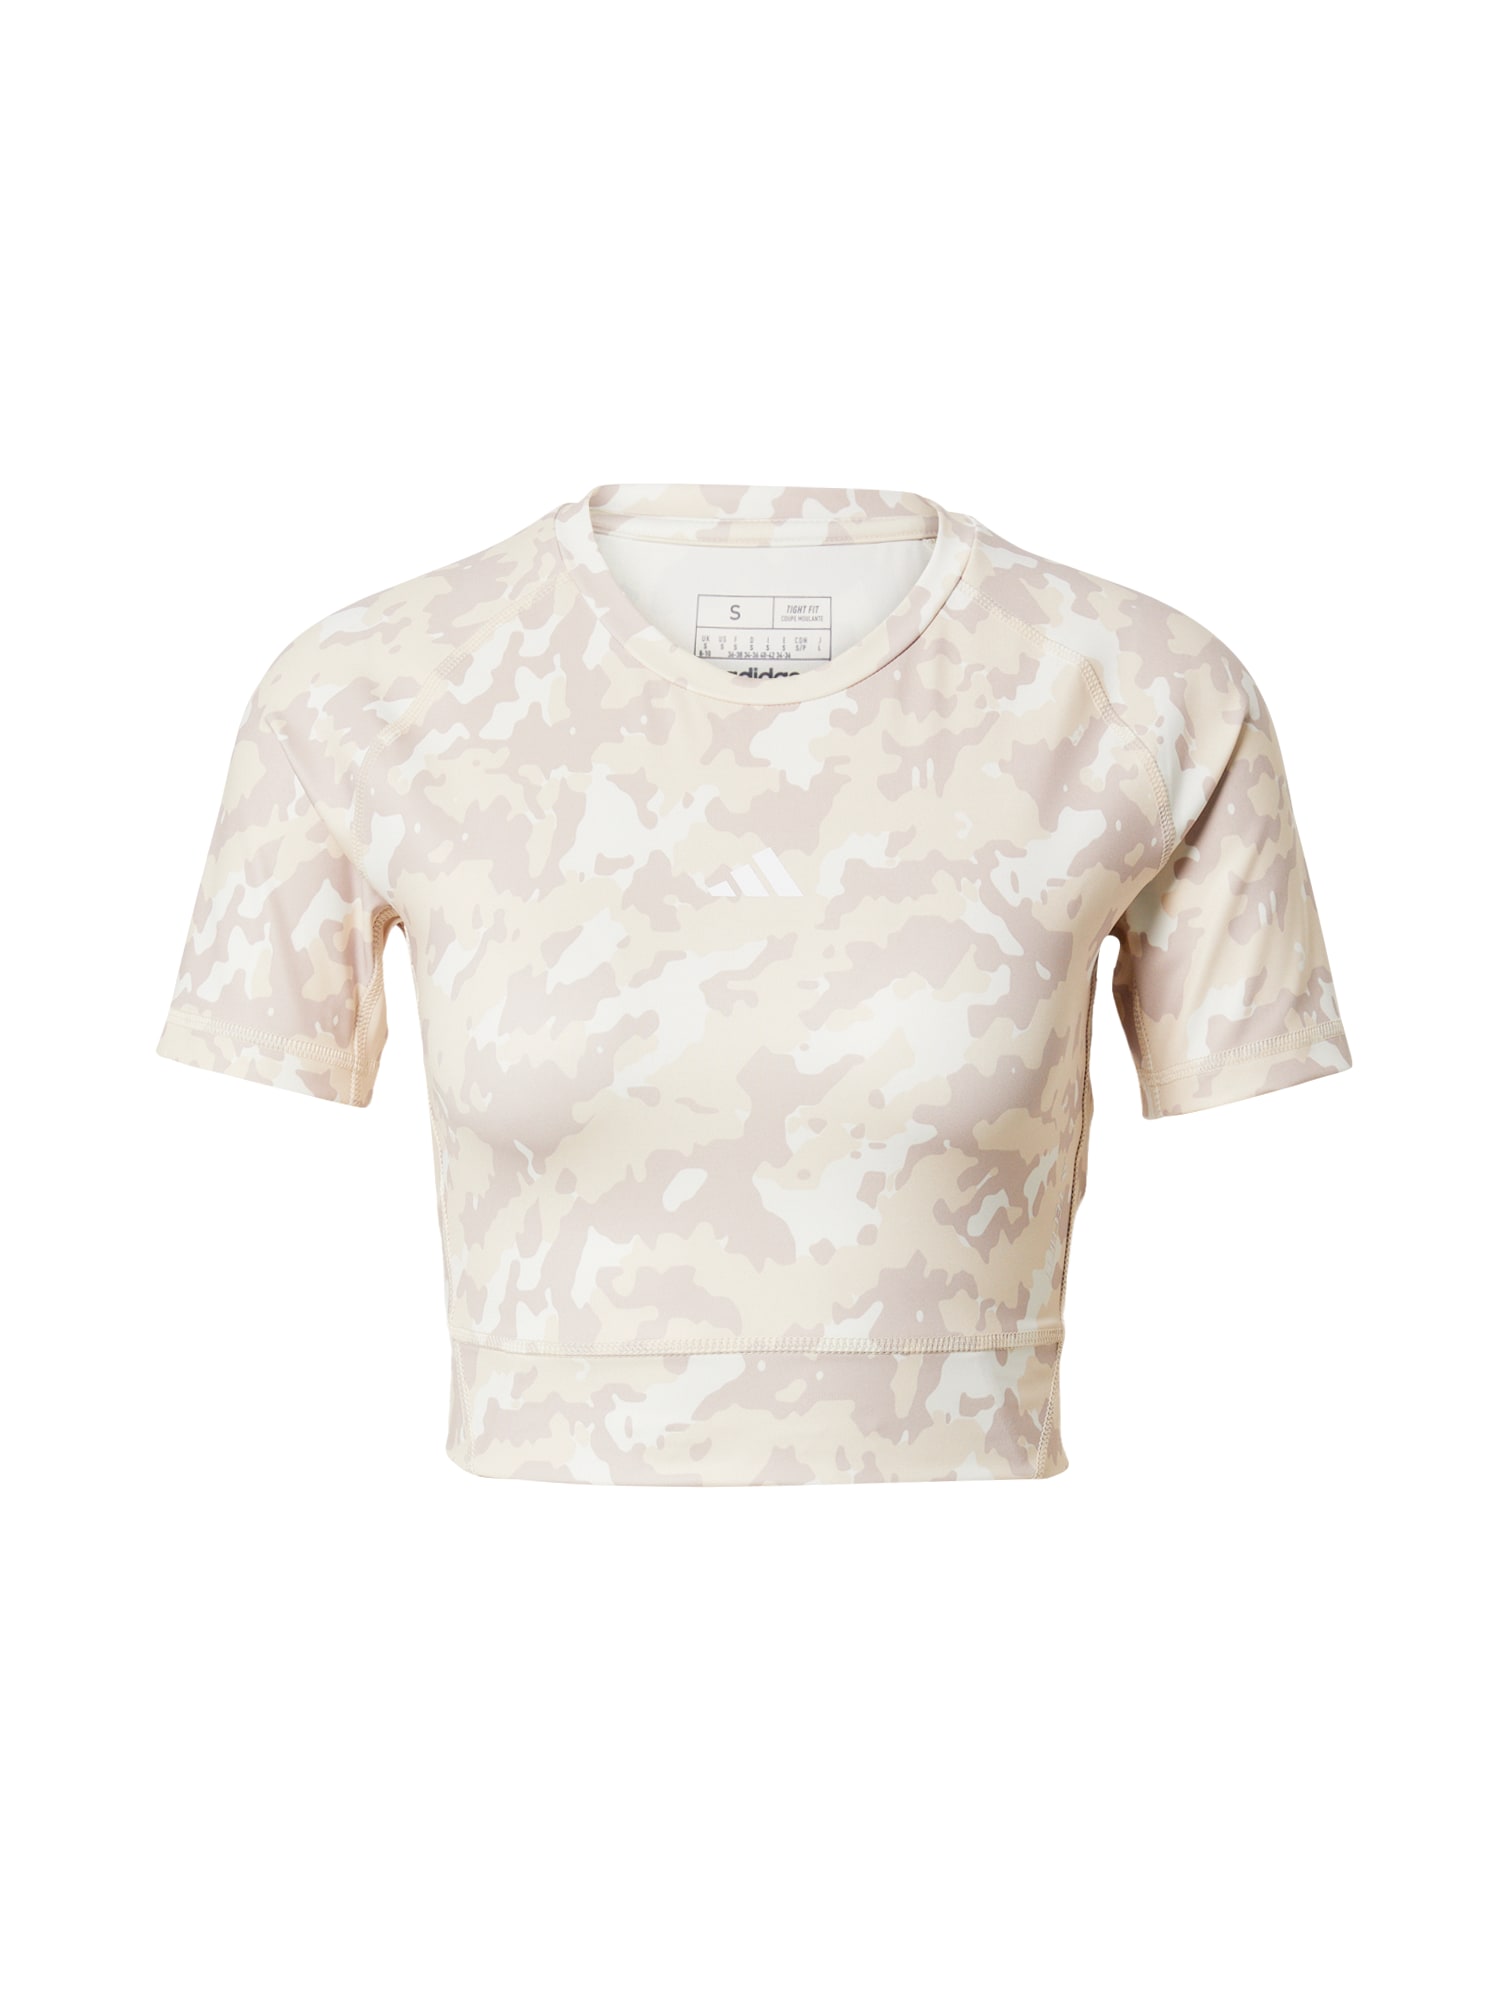 ADIDAS PERFORMANCE Funkcionalna majica  svetlo rjava / pastelno lila / bela